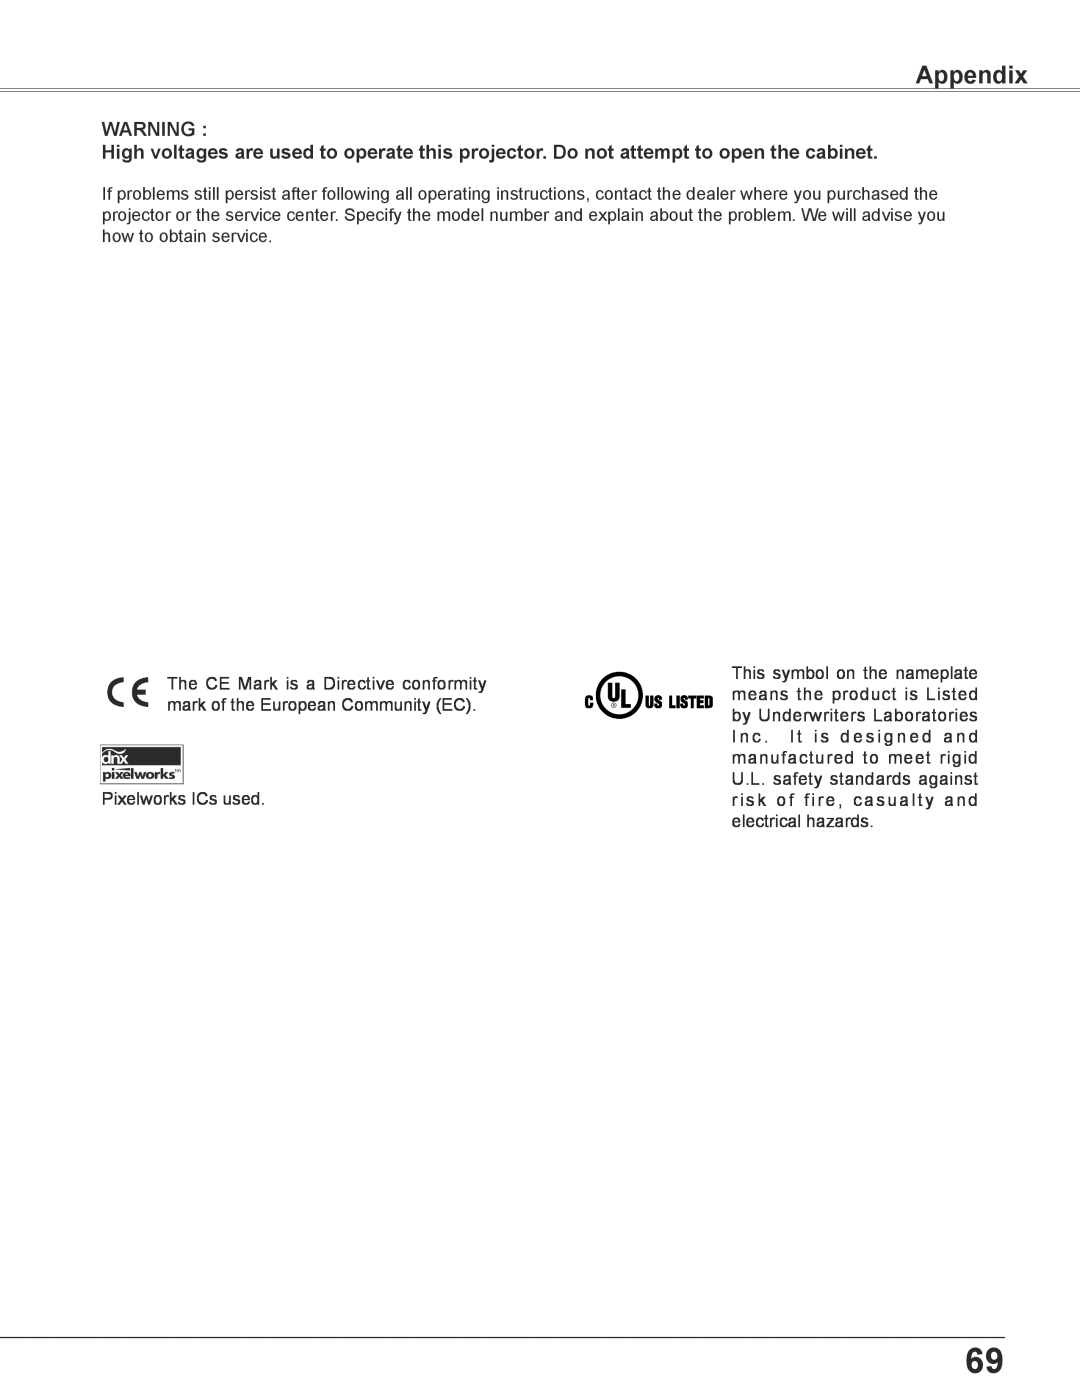 Sanyo PLC-XC56 owner manual Appendix, Pixelworks ICs used 